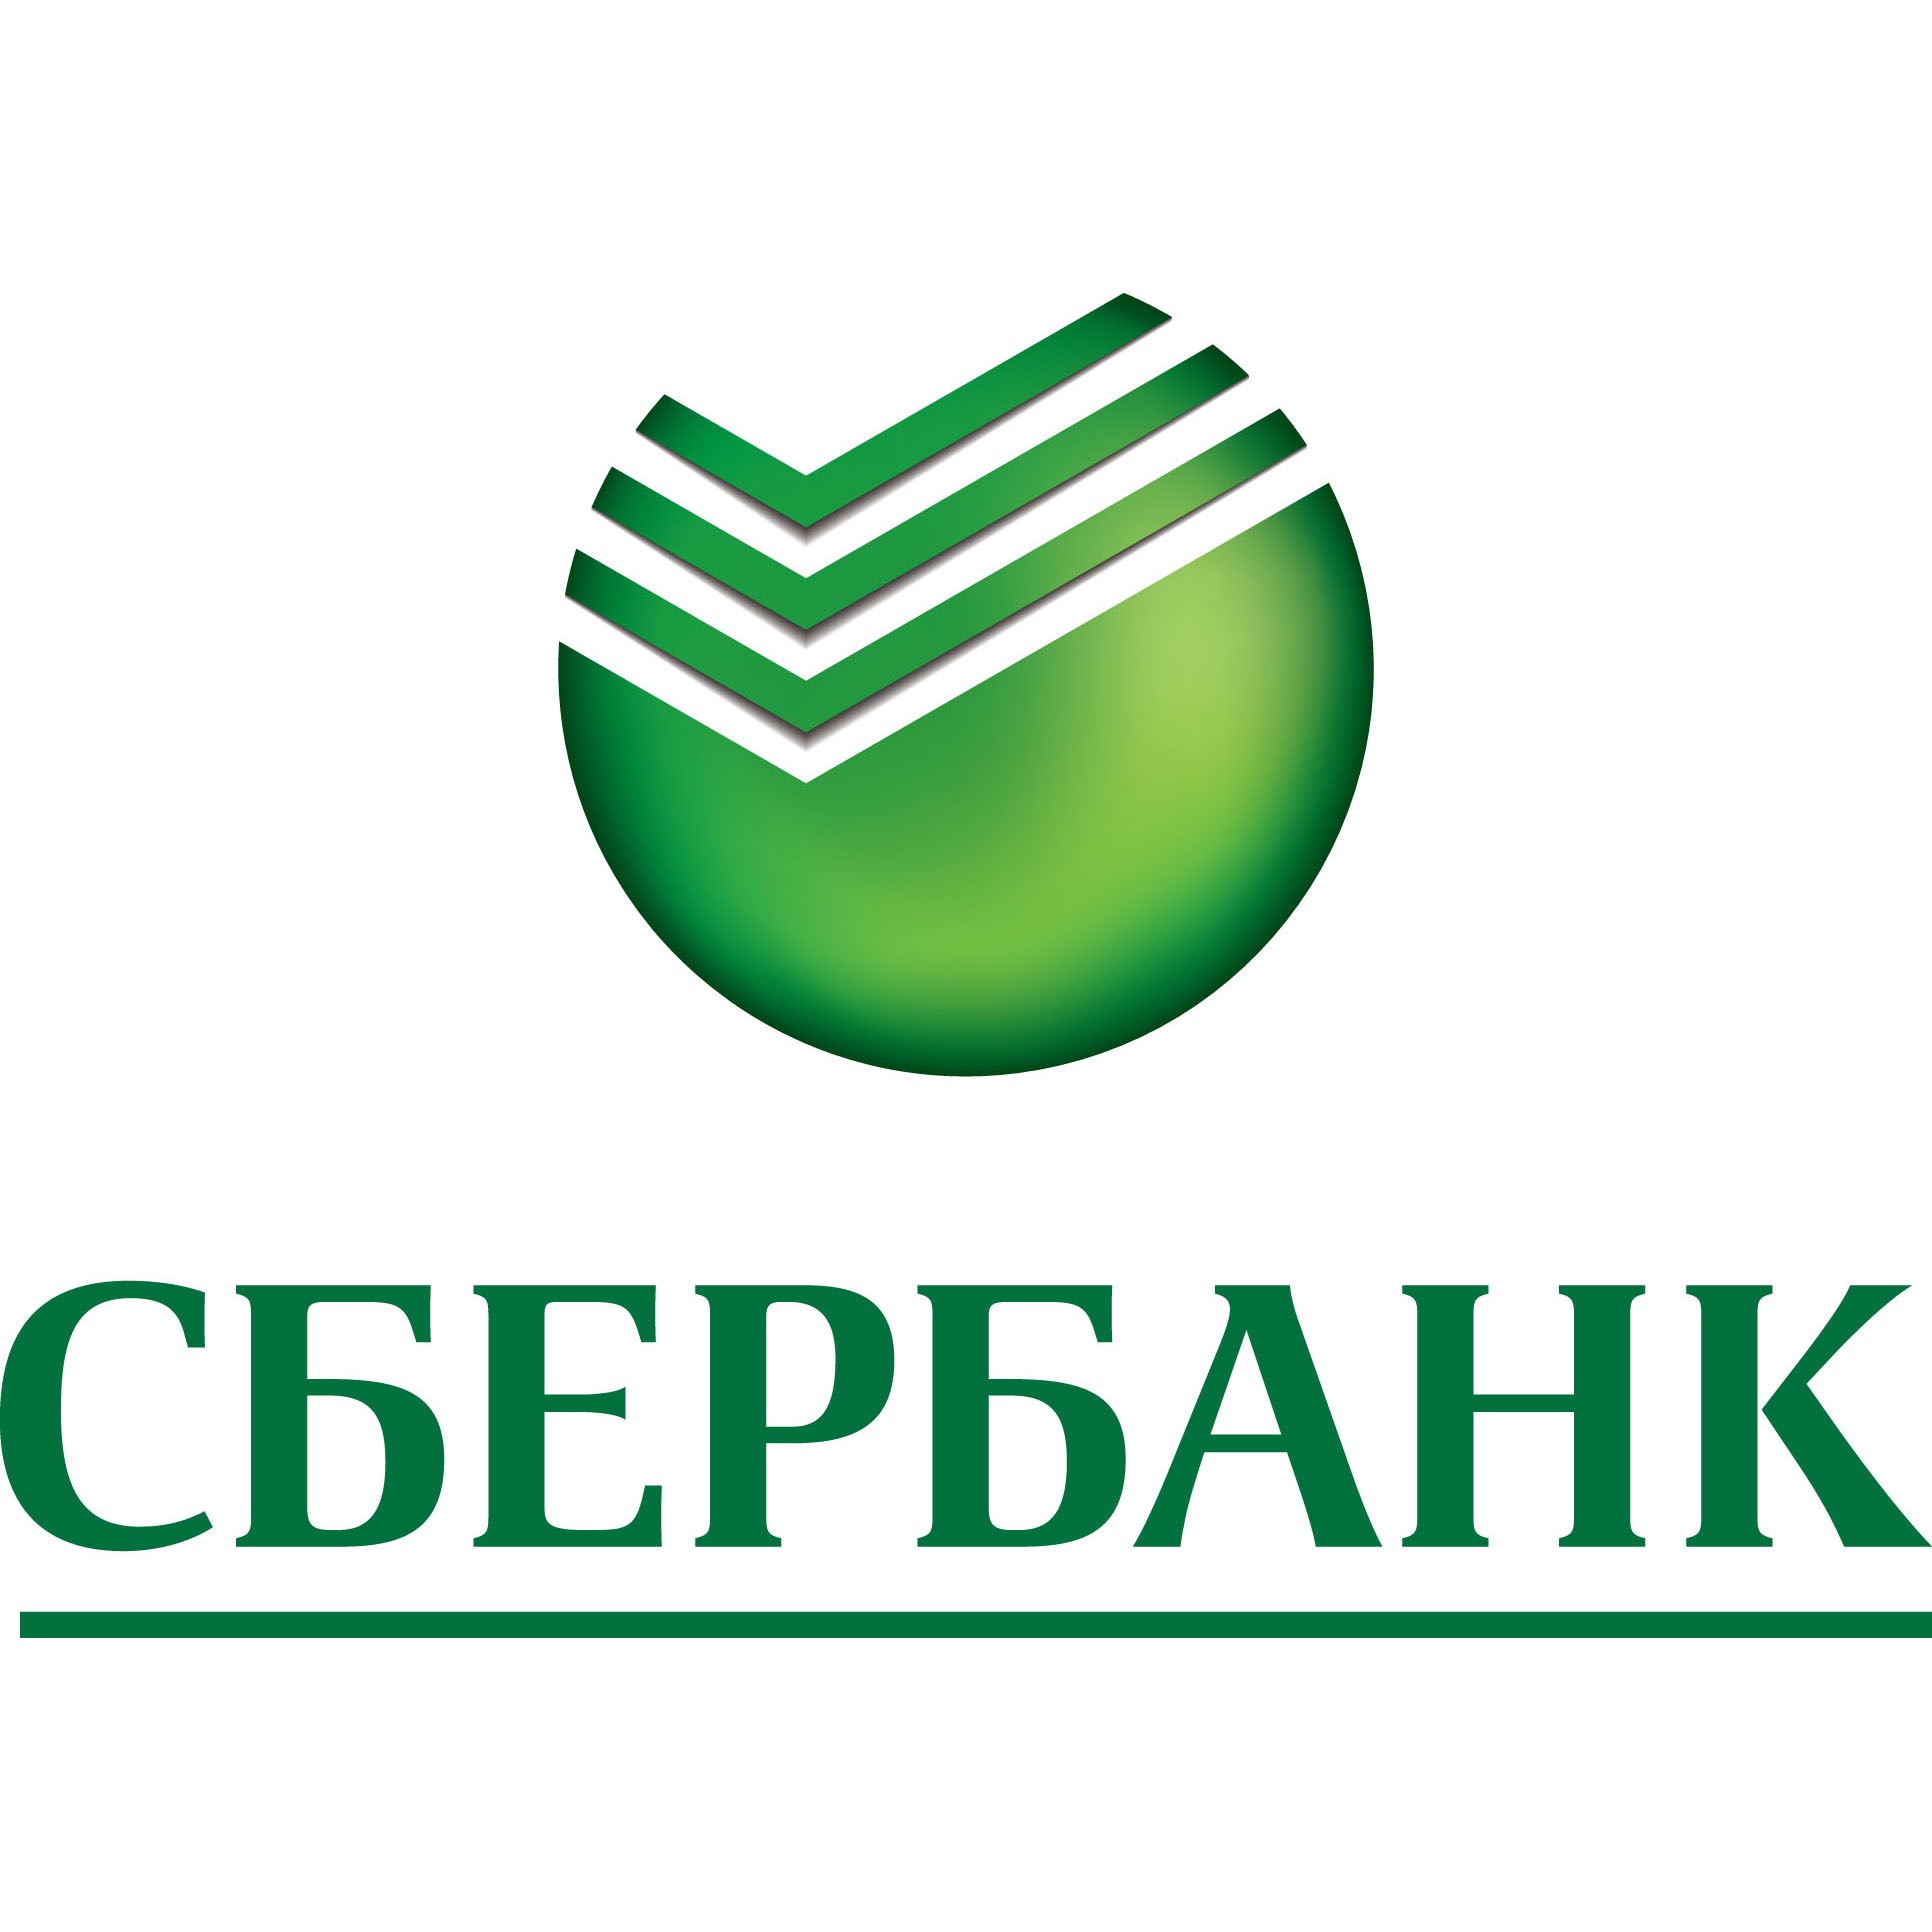 Сбербанк. Сбербанк логотип. Старый логотип Сбербанка. Сбербанк фон. Sberbank service cc